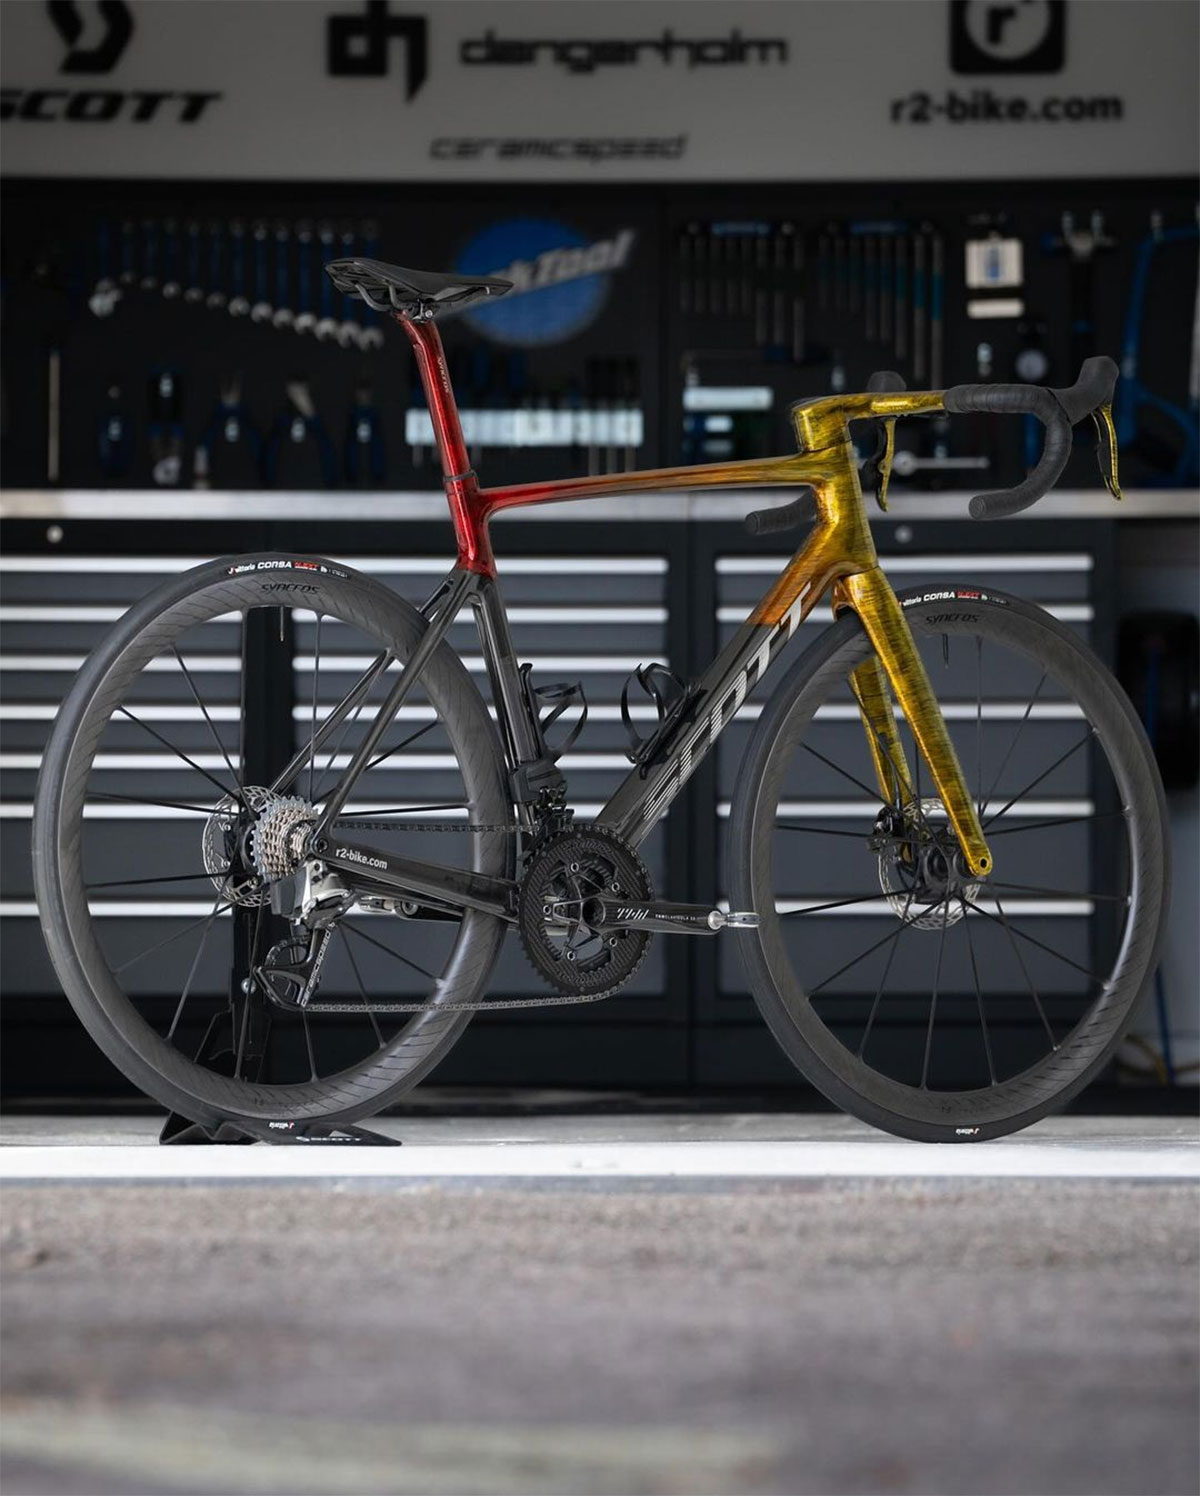 Scott Addict RC Sunset de Dangerholm, una bici de carretera atemporal para todo tipo de usos